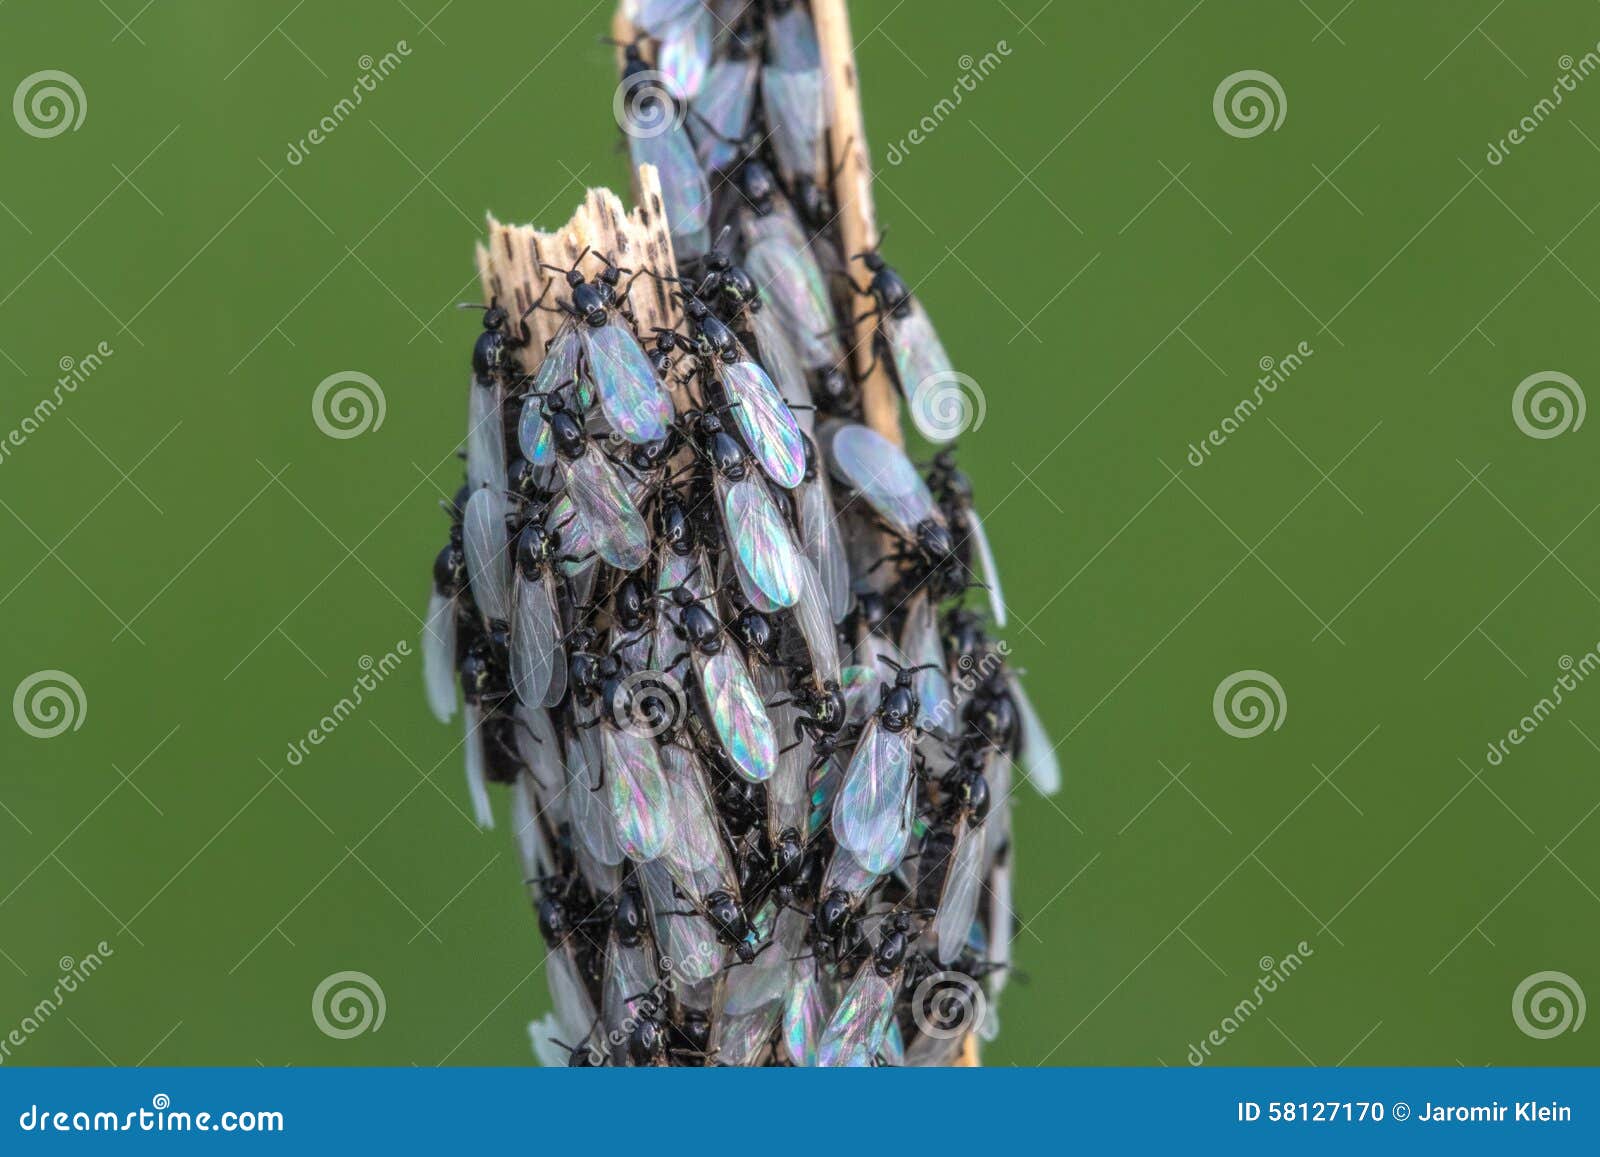 cluster flies with pearl wings